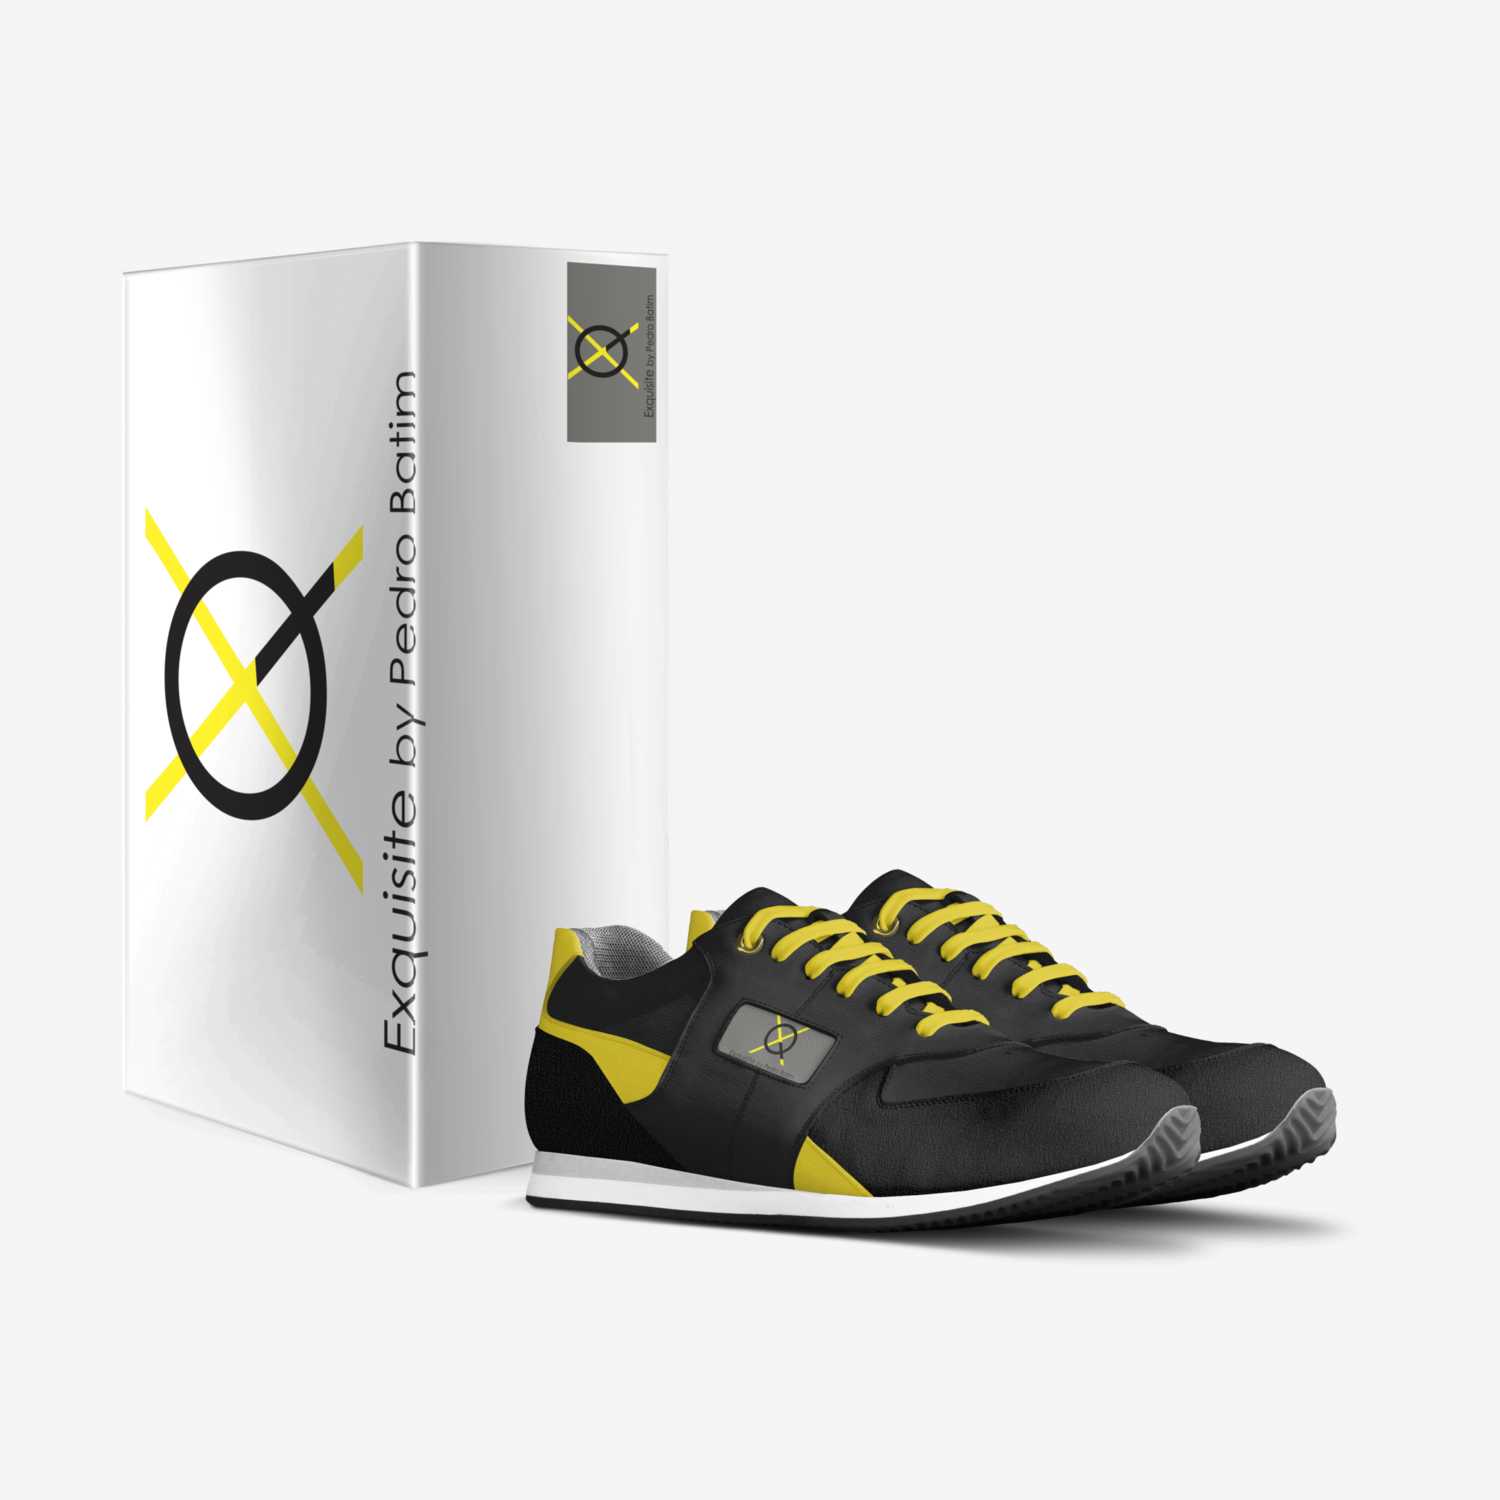 XQ by Pedro Batim custom made in Italy shoes by Pedro Batim | Box view